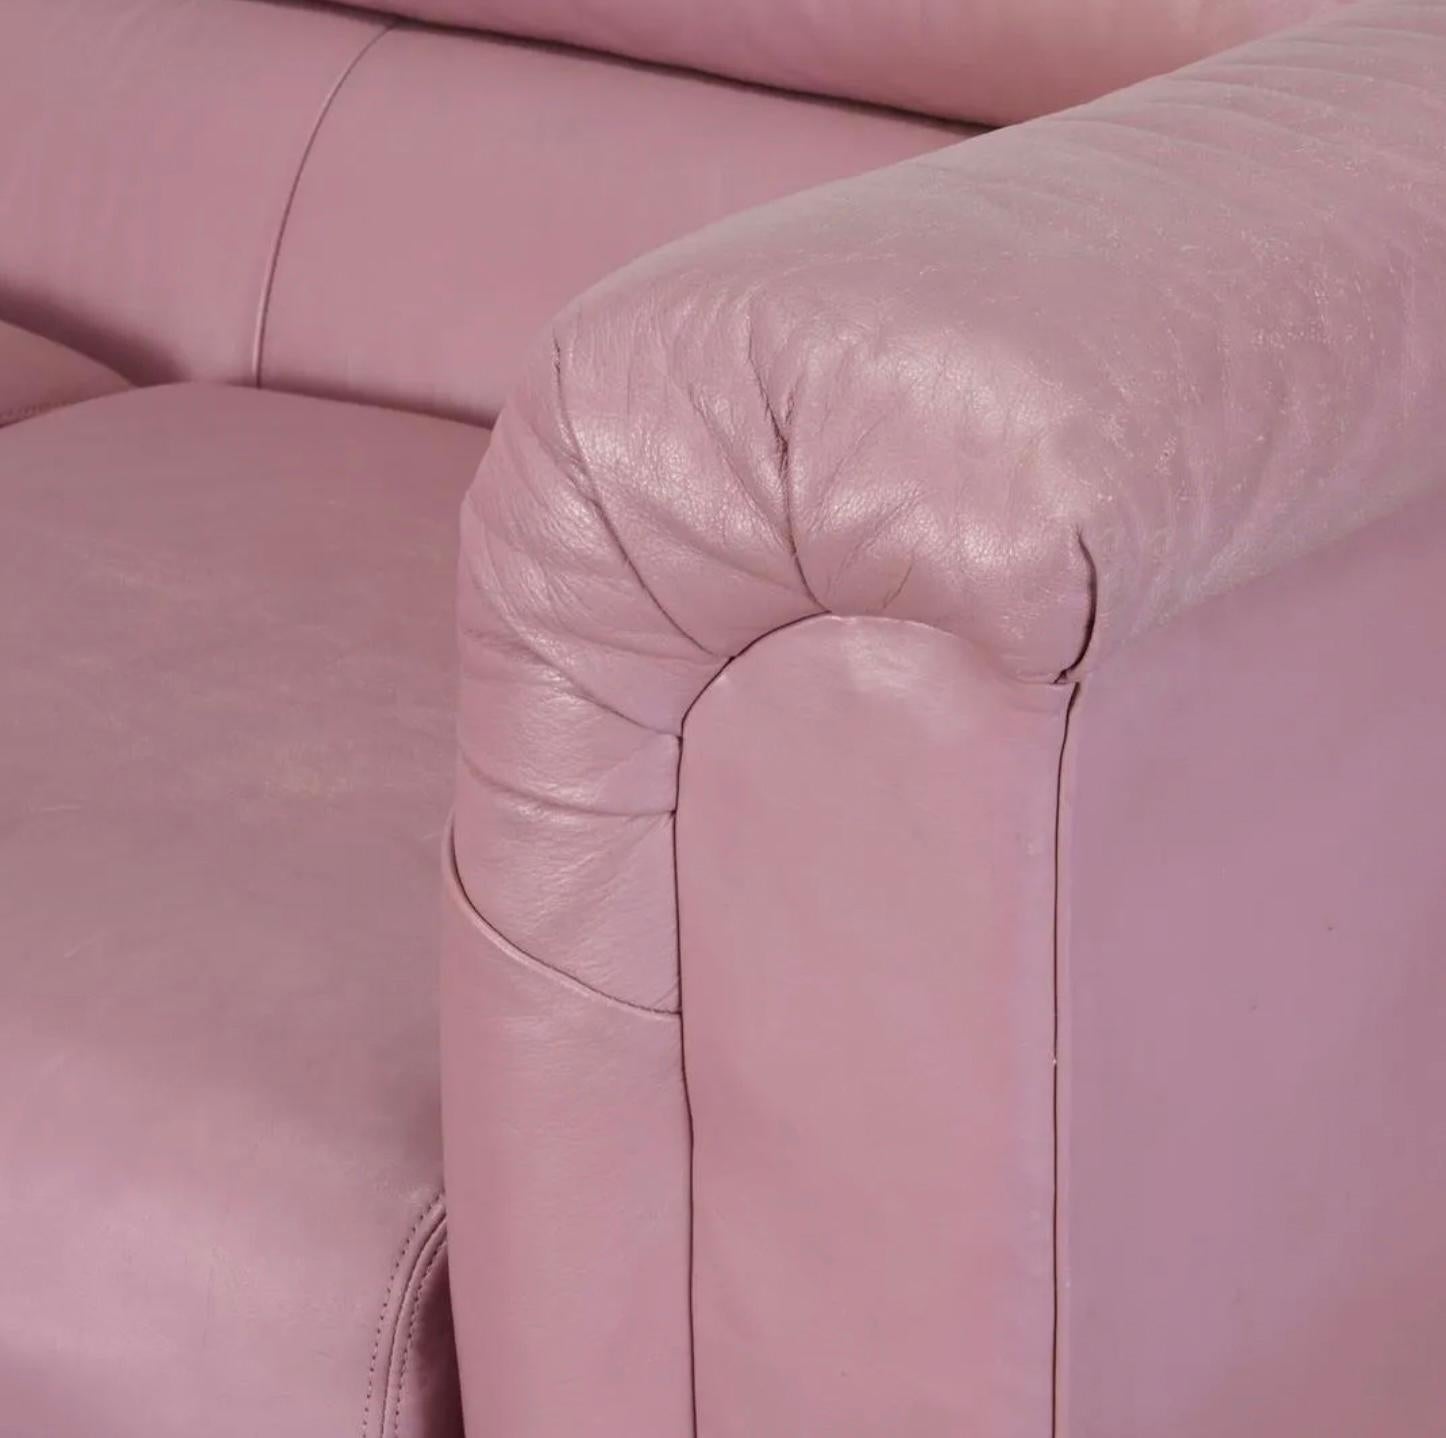 pink leather sofa